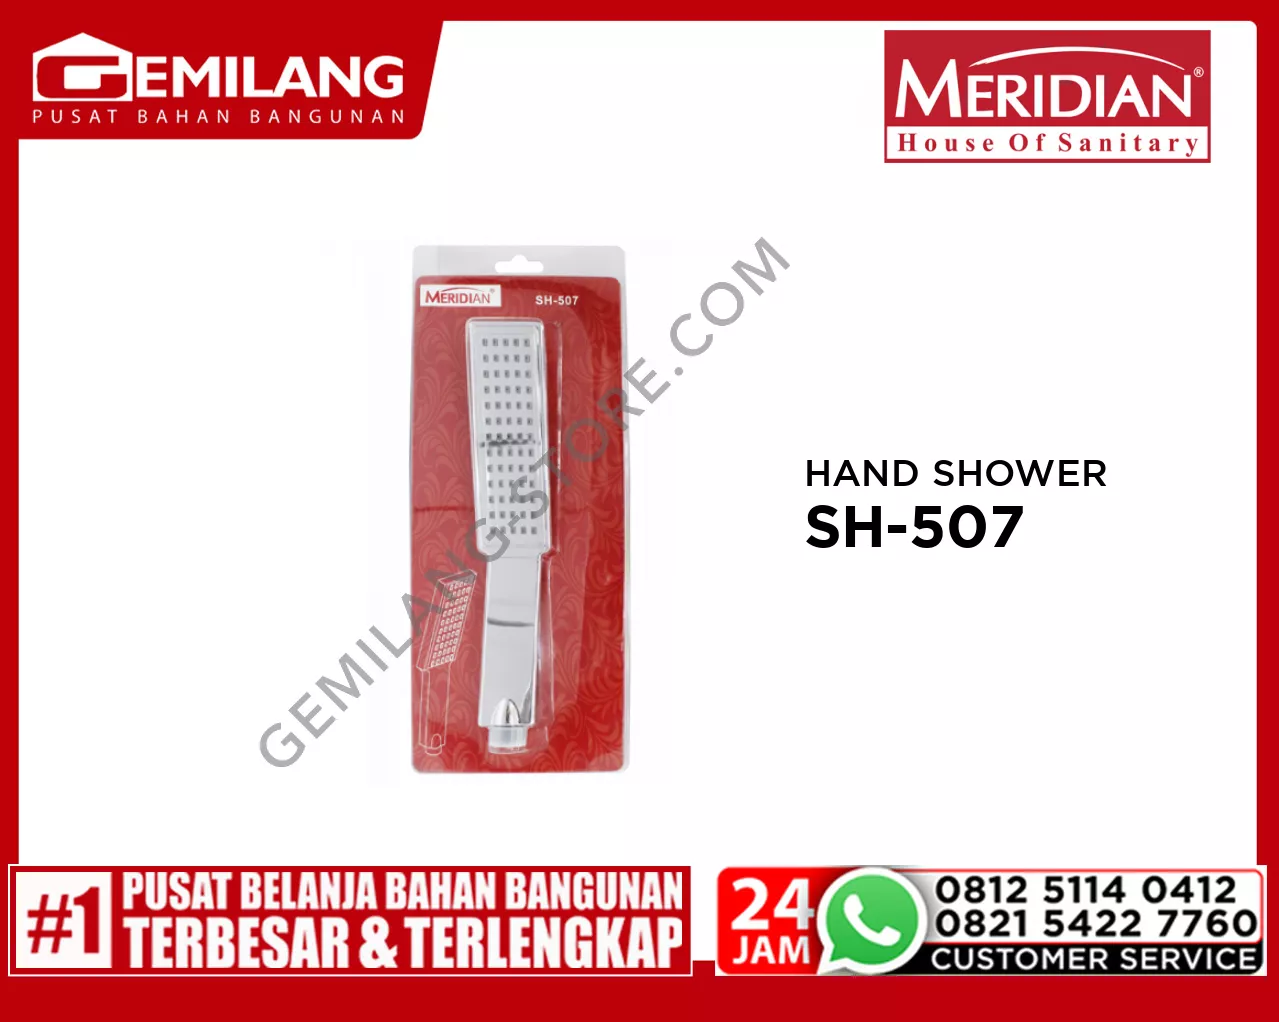 MERIDIAN HAND SHOWER SH-507